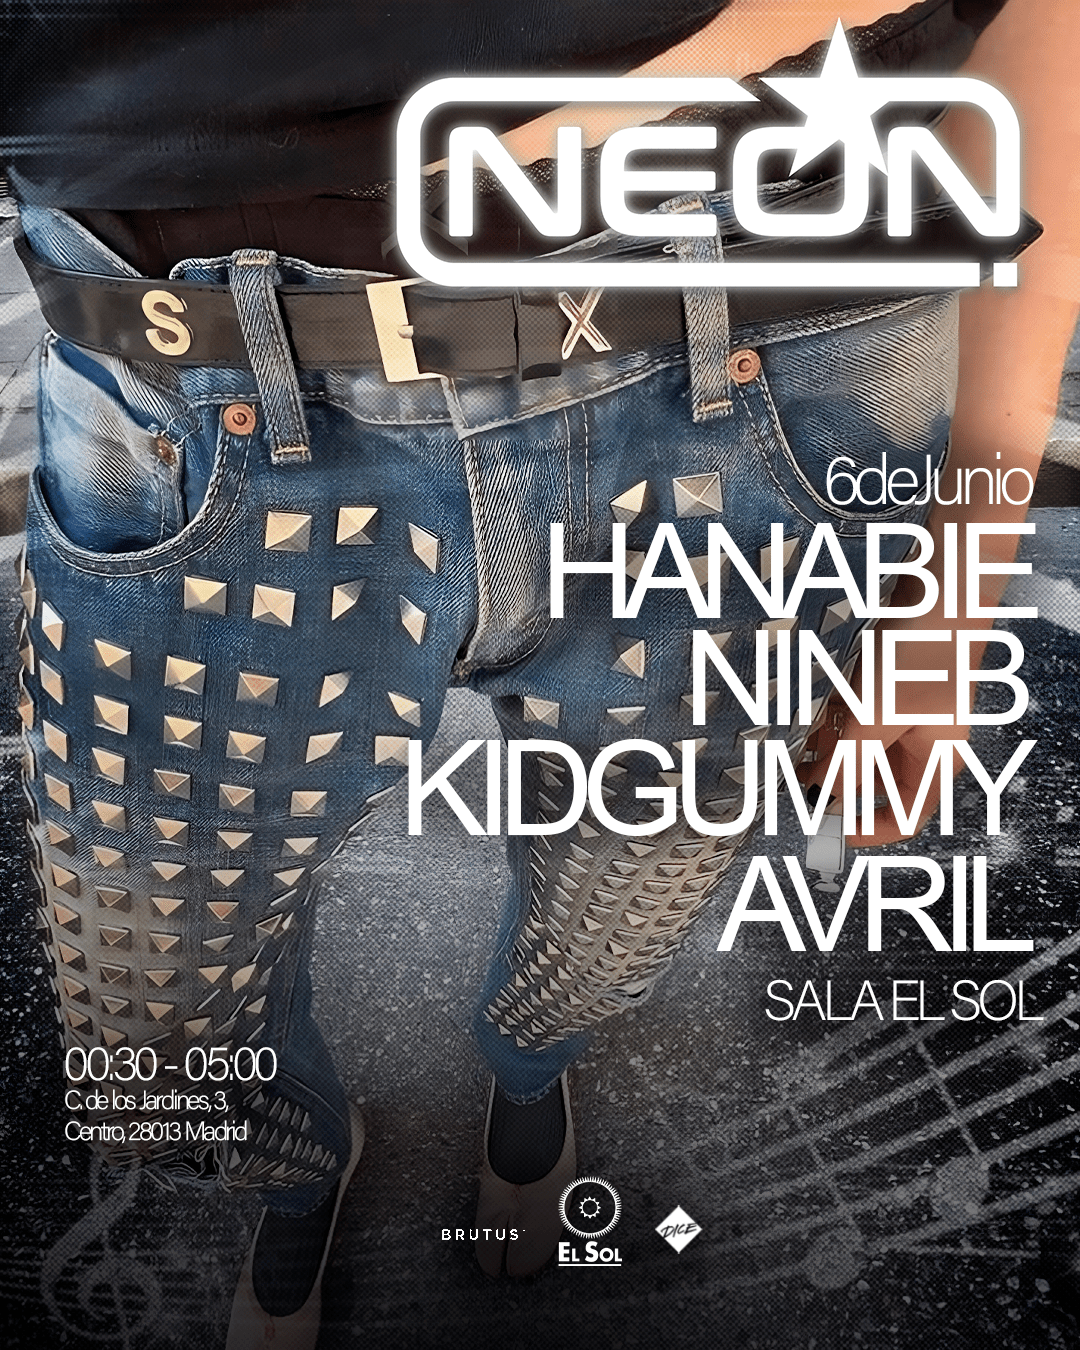 Neon StarClub: Nine B + Hanabie + kid Gummy + Avrrrril